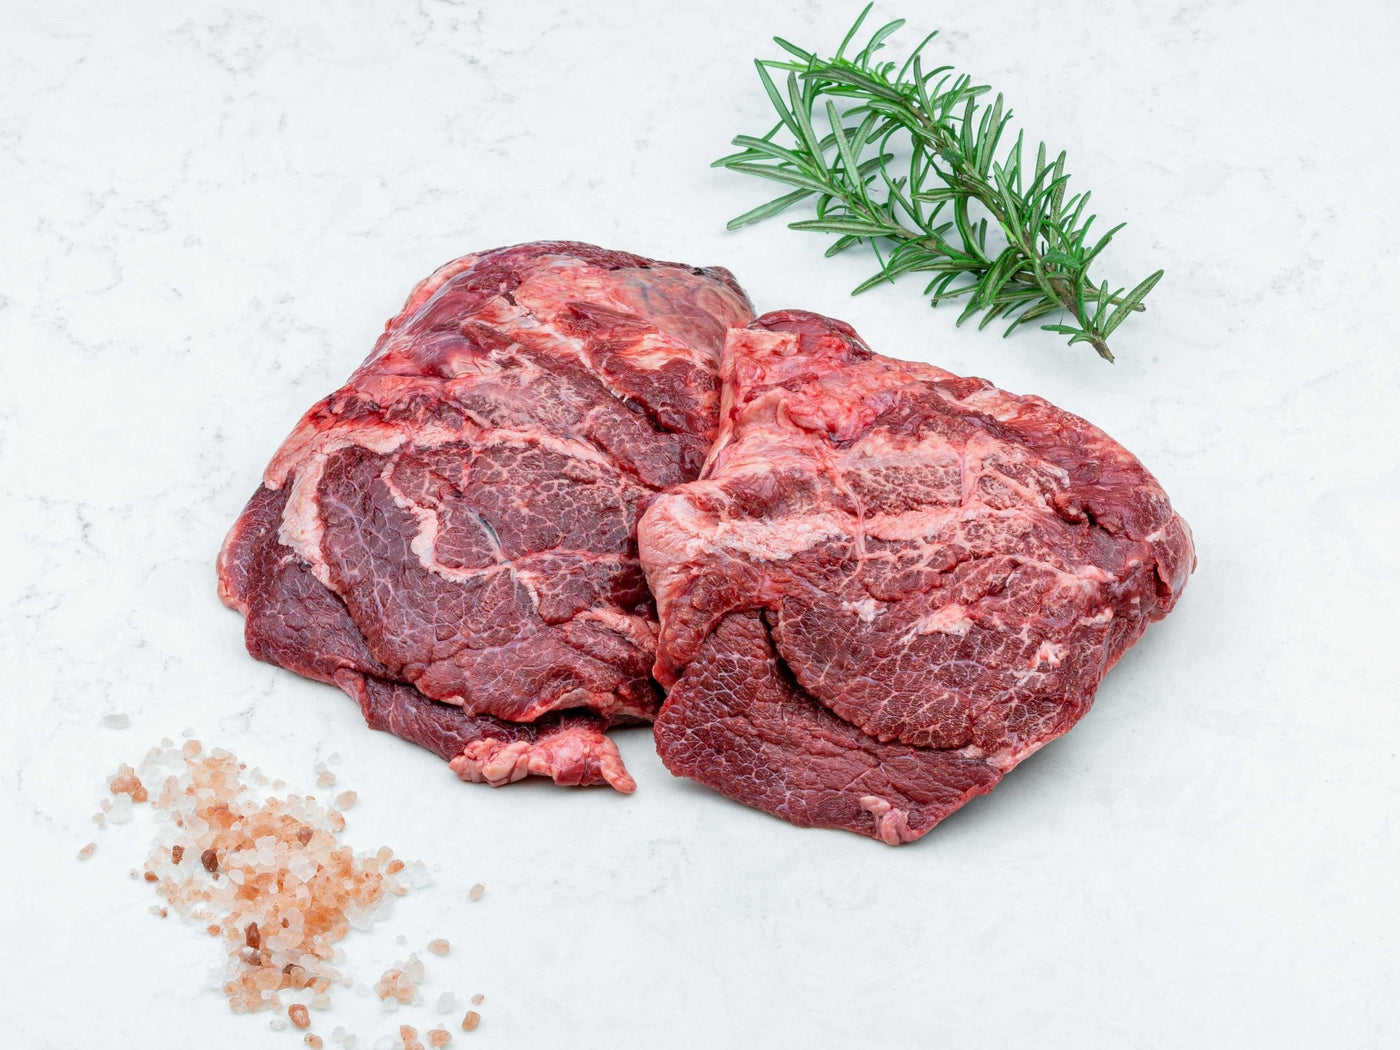 Grass Fed Ox Cheek - Beef - Thomas Joseph Butchery - Ethical Dry-Aged Meat The Best Steak UK Thomas Joseph Butchery